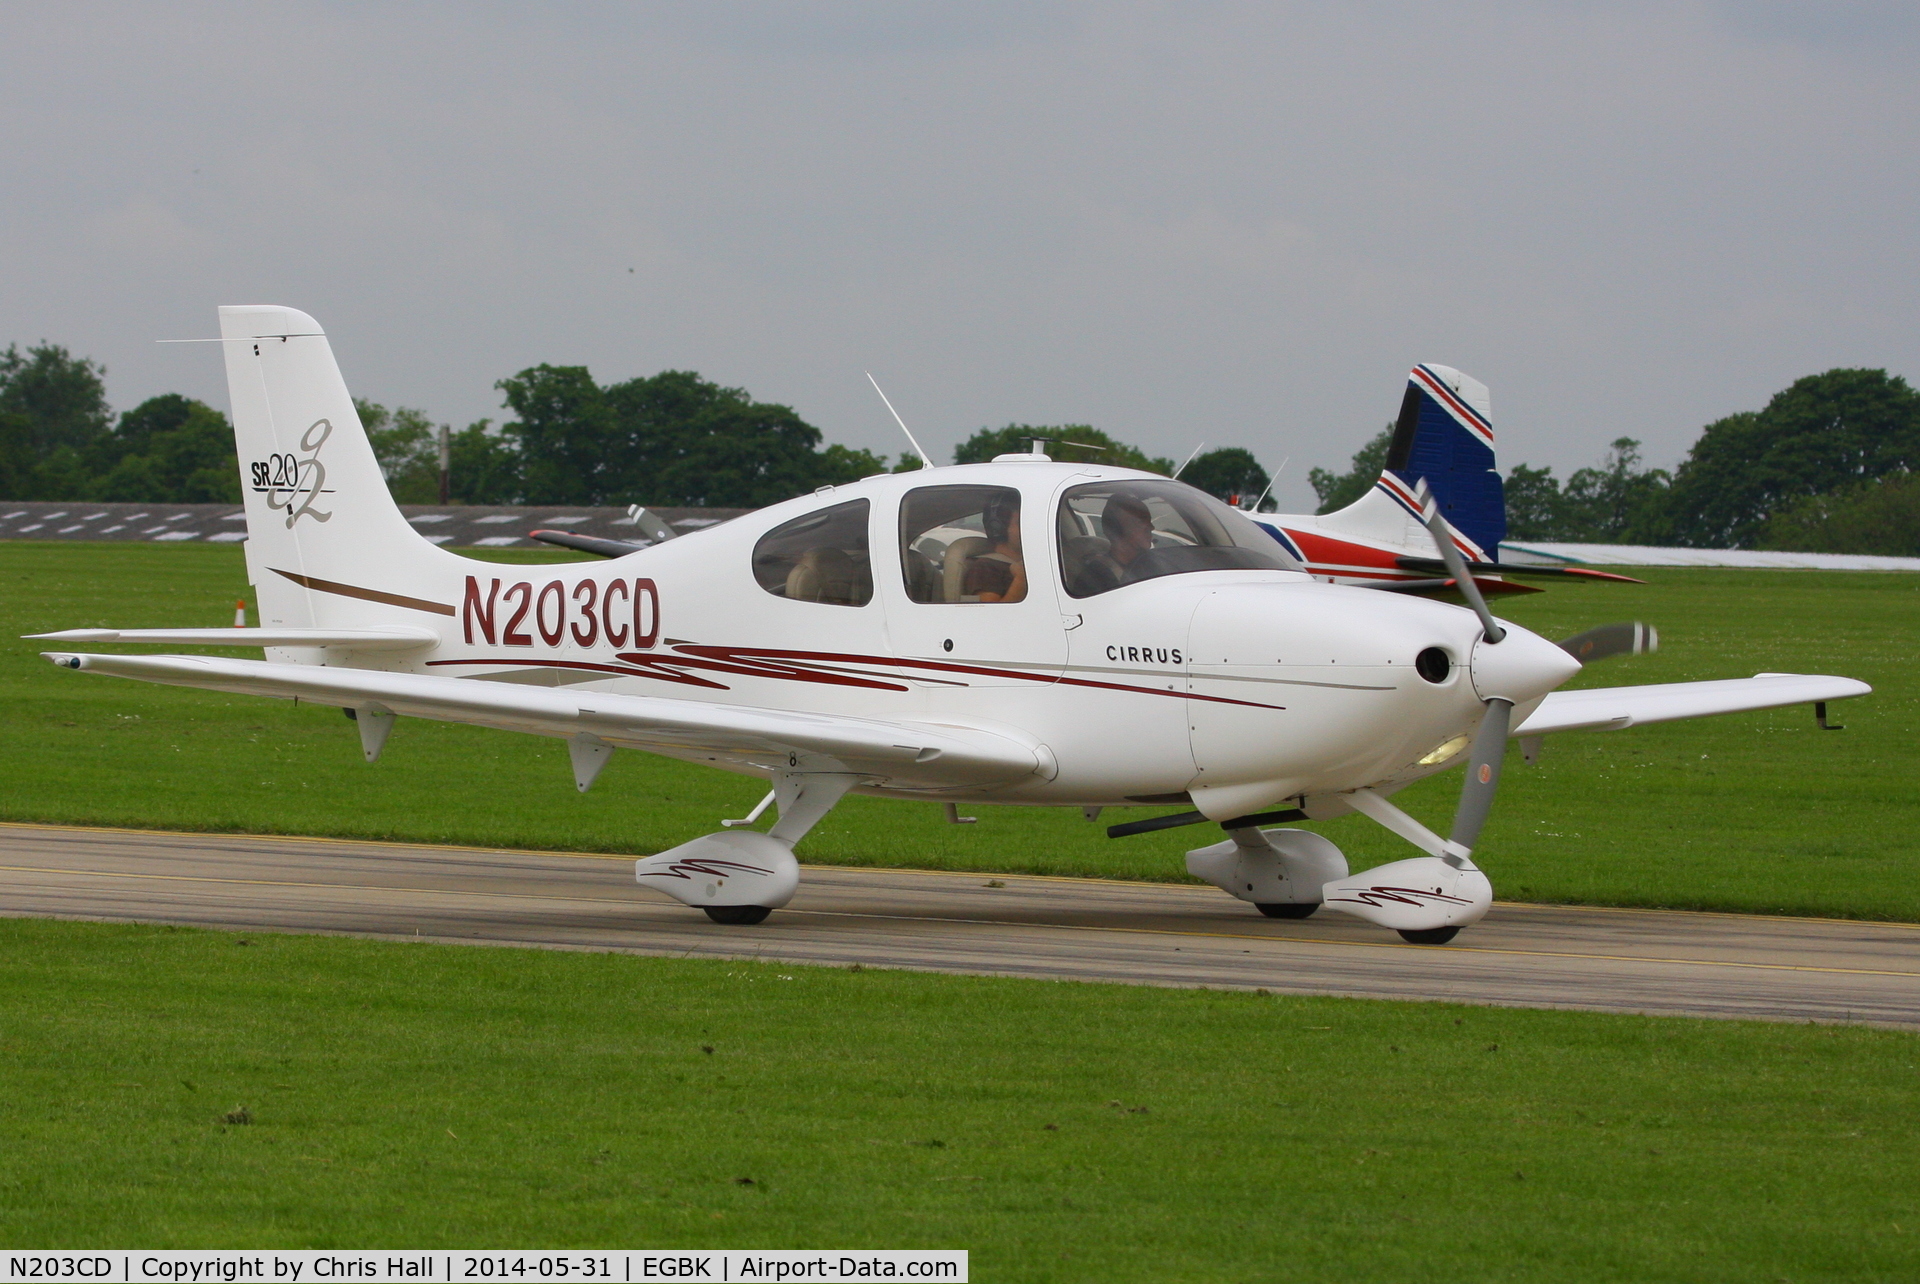 N203CD, 2004 Cirrus SR20 G2 C/N 1451, at AeroExpo 2014